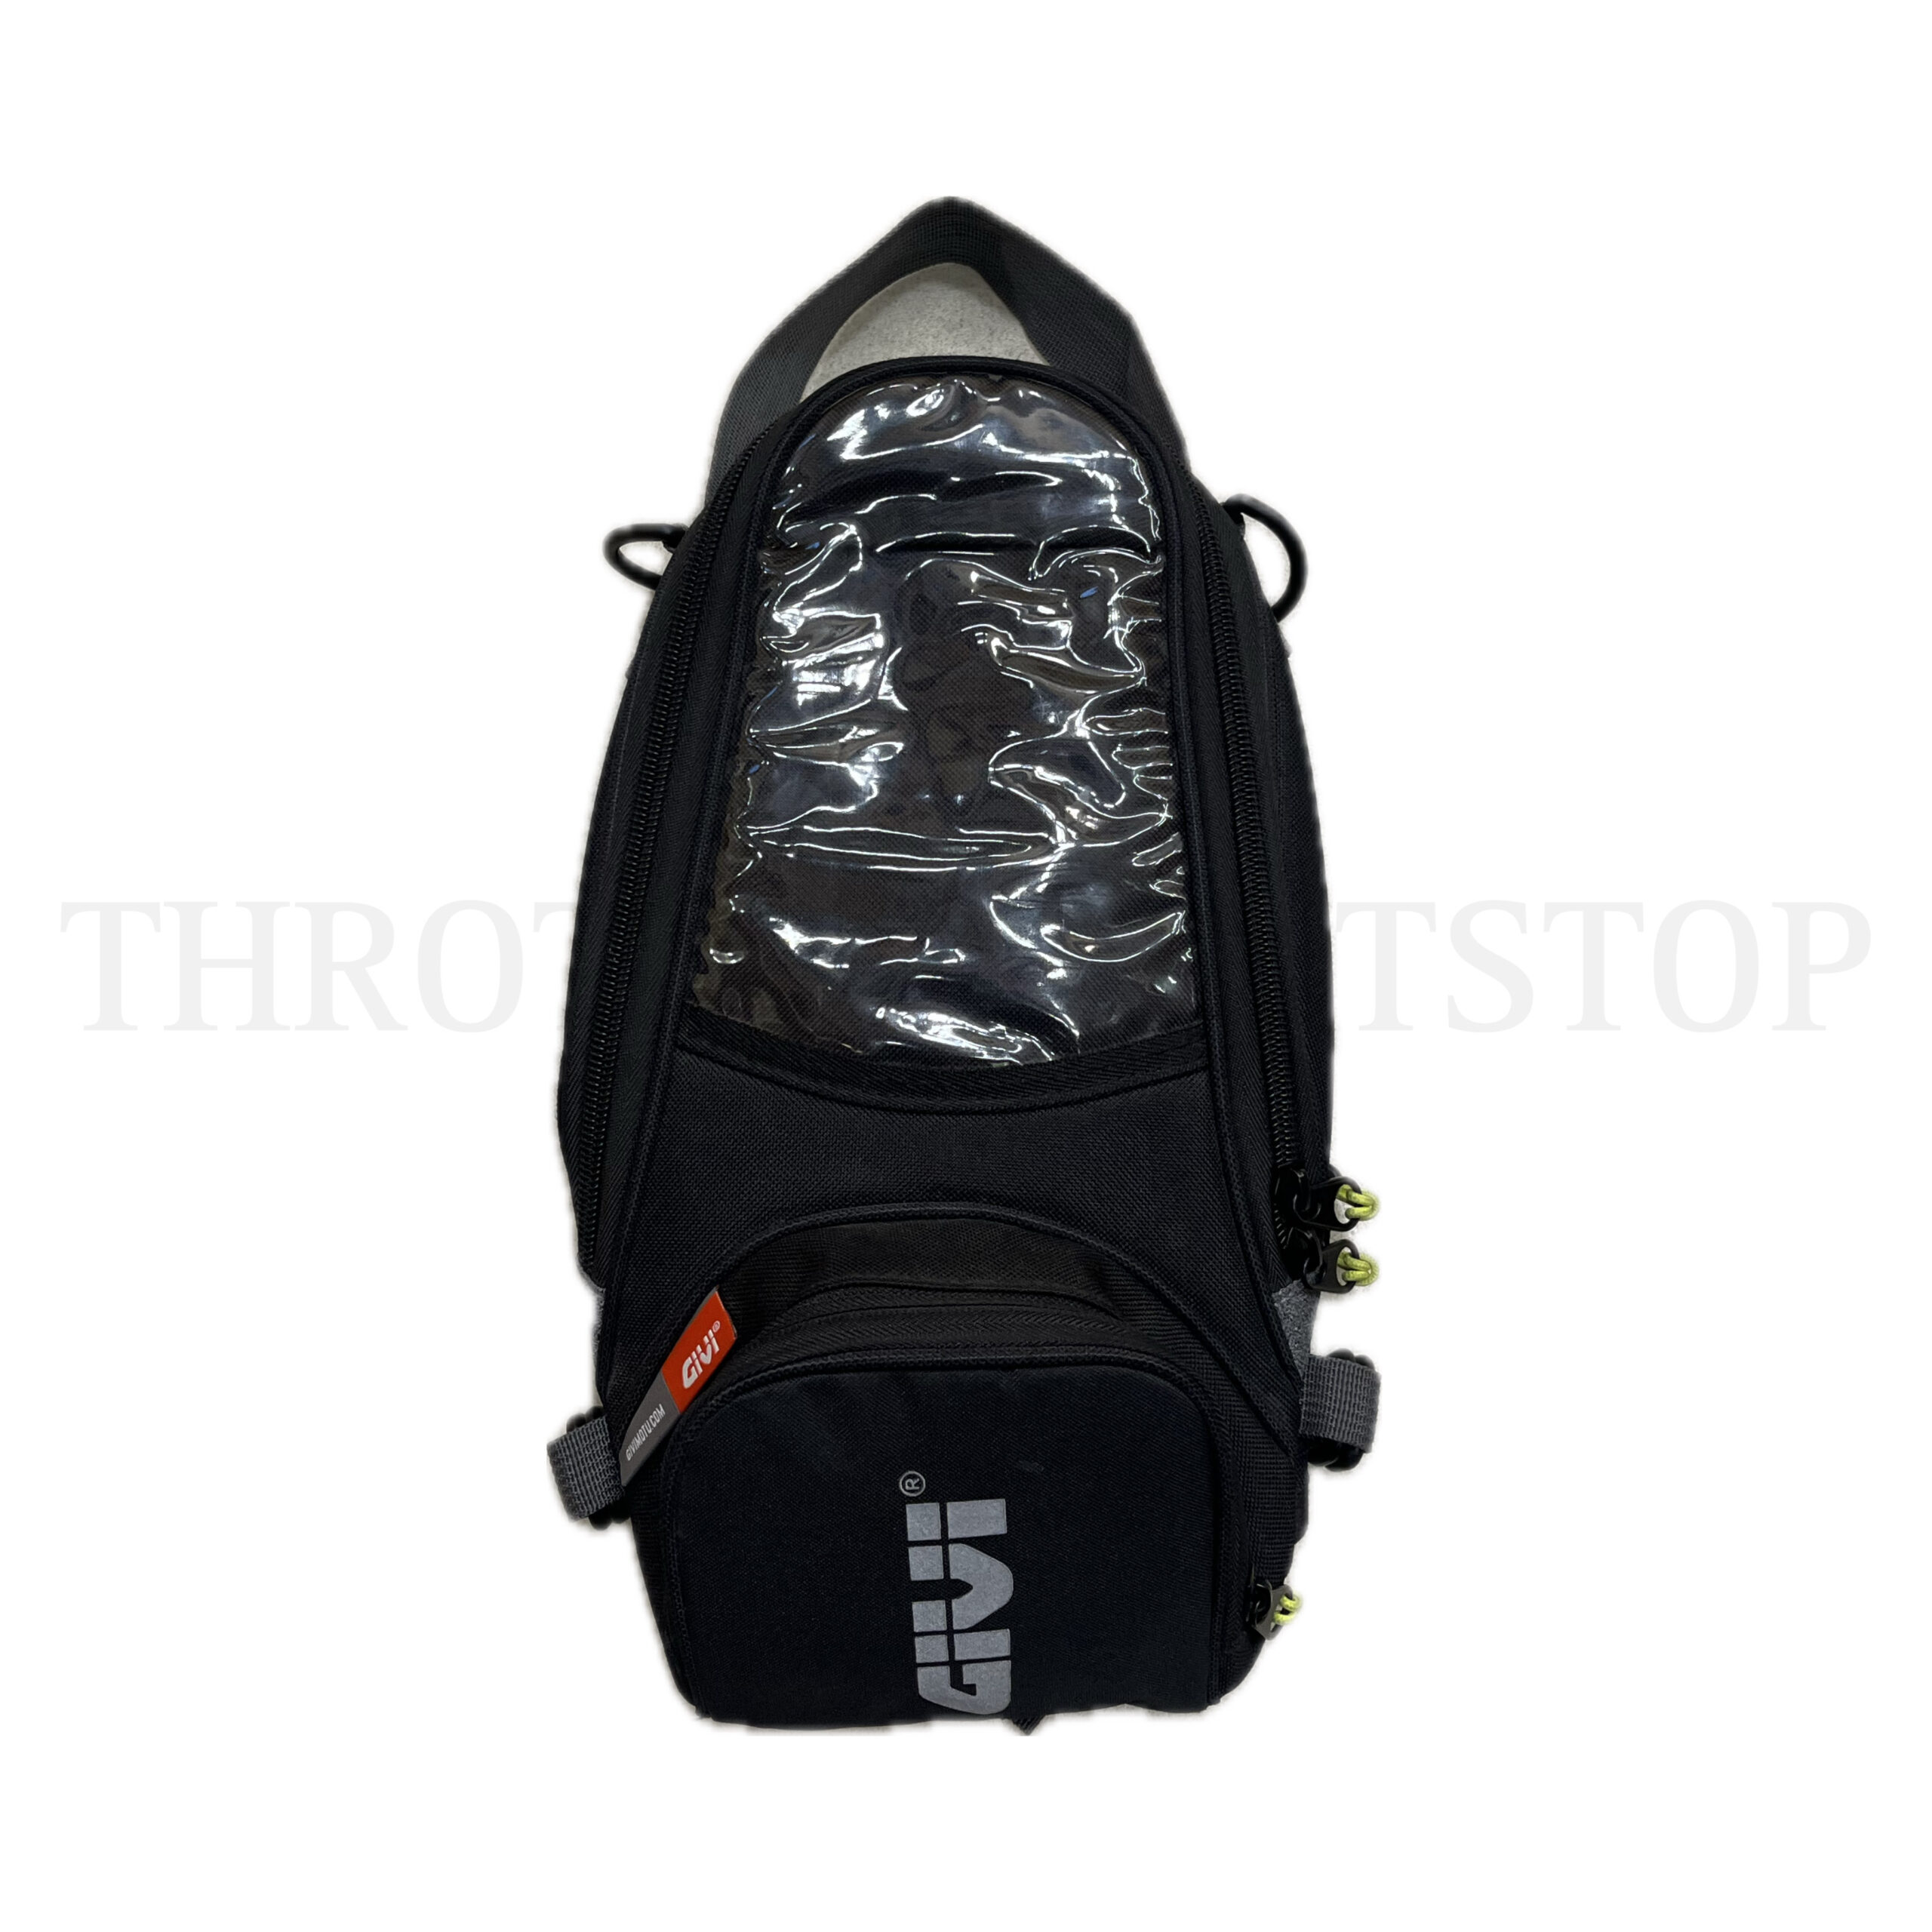 Givi (Tank Bag) - ST605C Tanlocked Bag 5L (Black) - Accessories from  bikersworldstore.co.uk UK